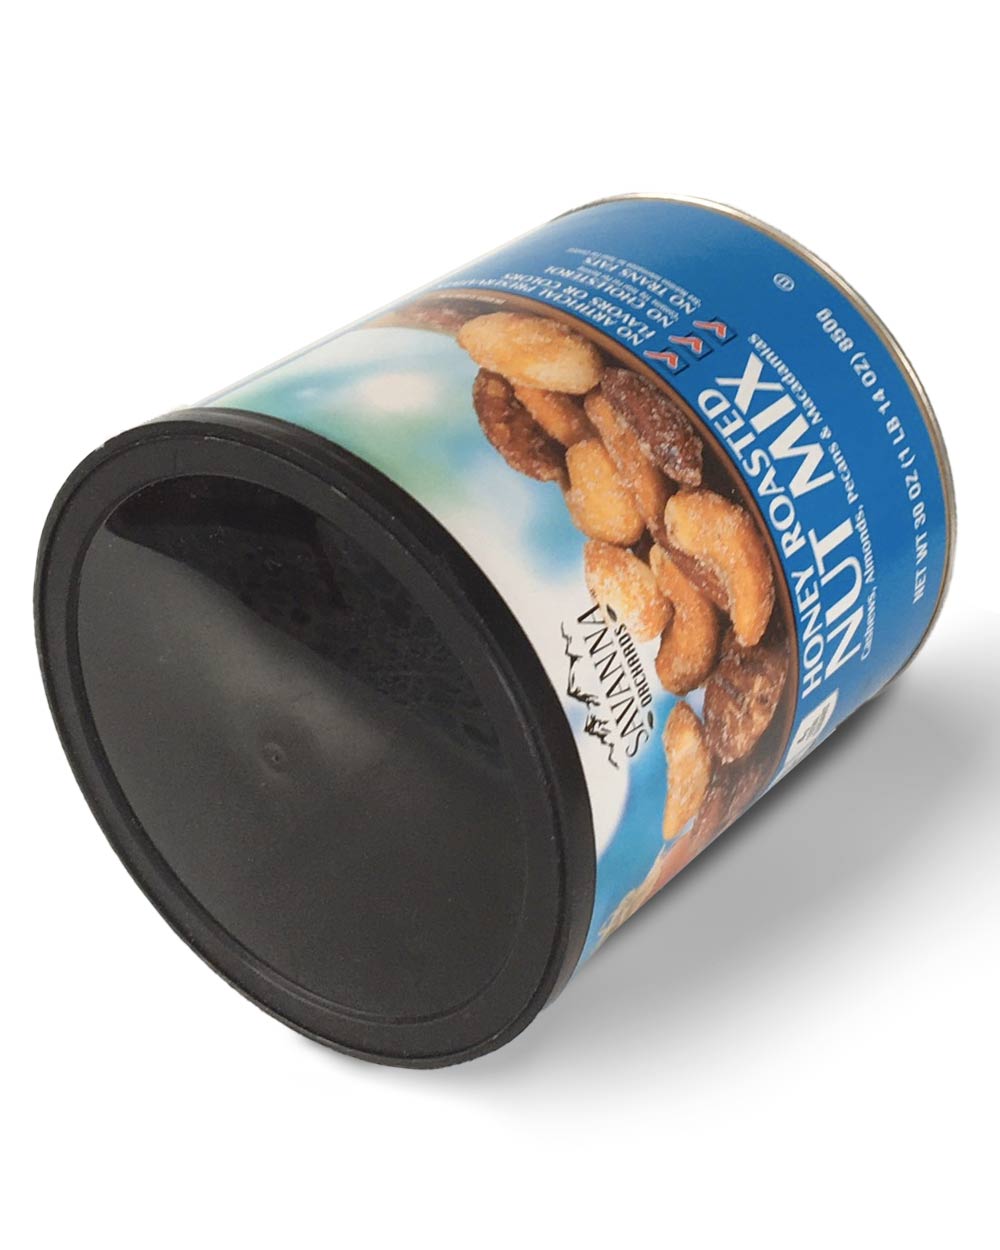 Savanna Orchards Gourmet Honey Roasted Nut Mix with Macadamia, 30